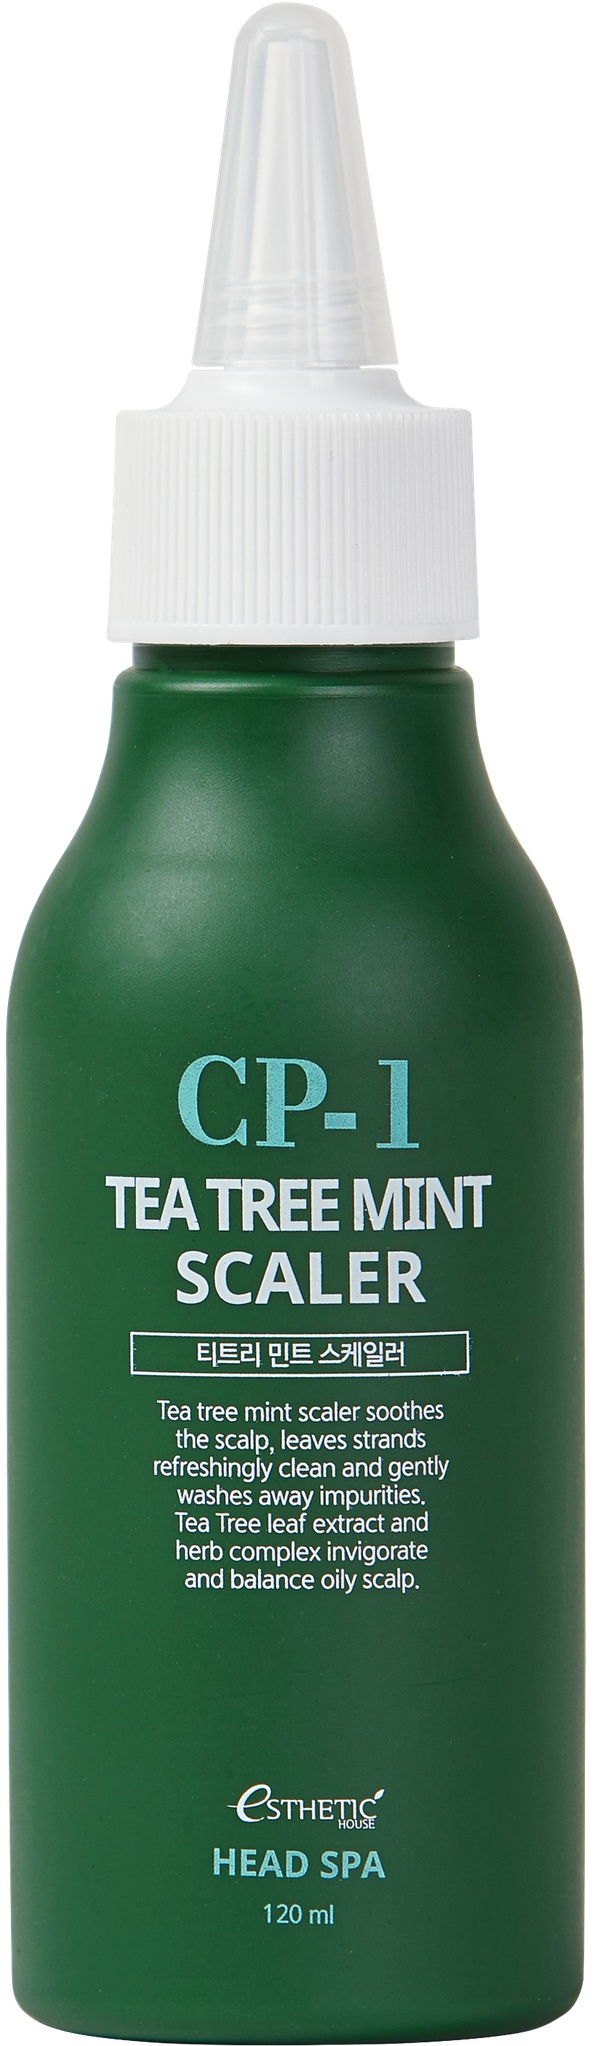 CP-1 Tea Tree Mint Scaler